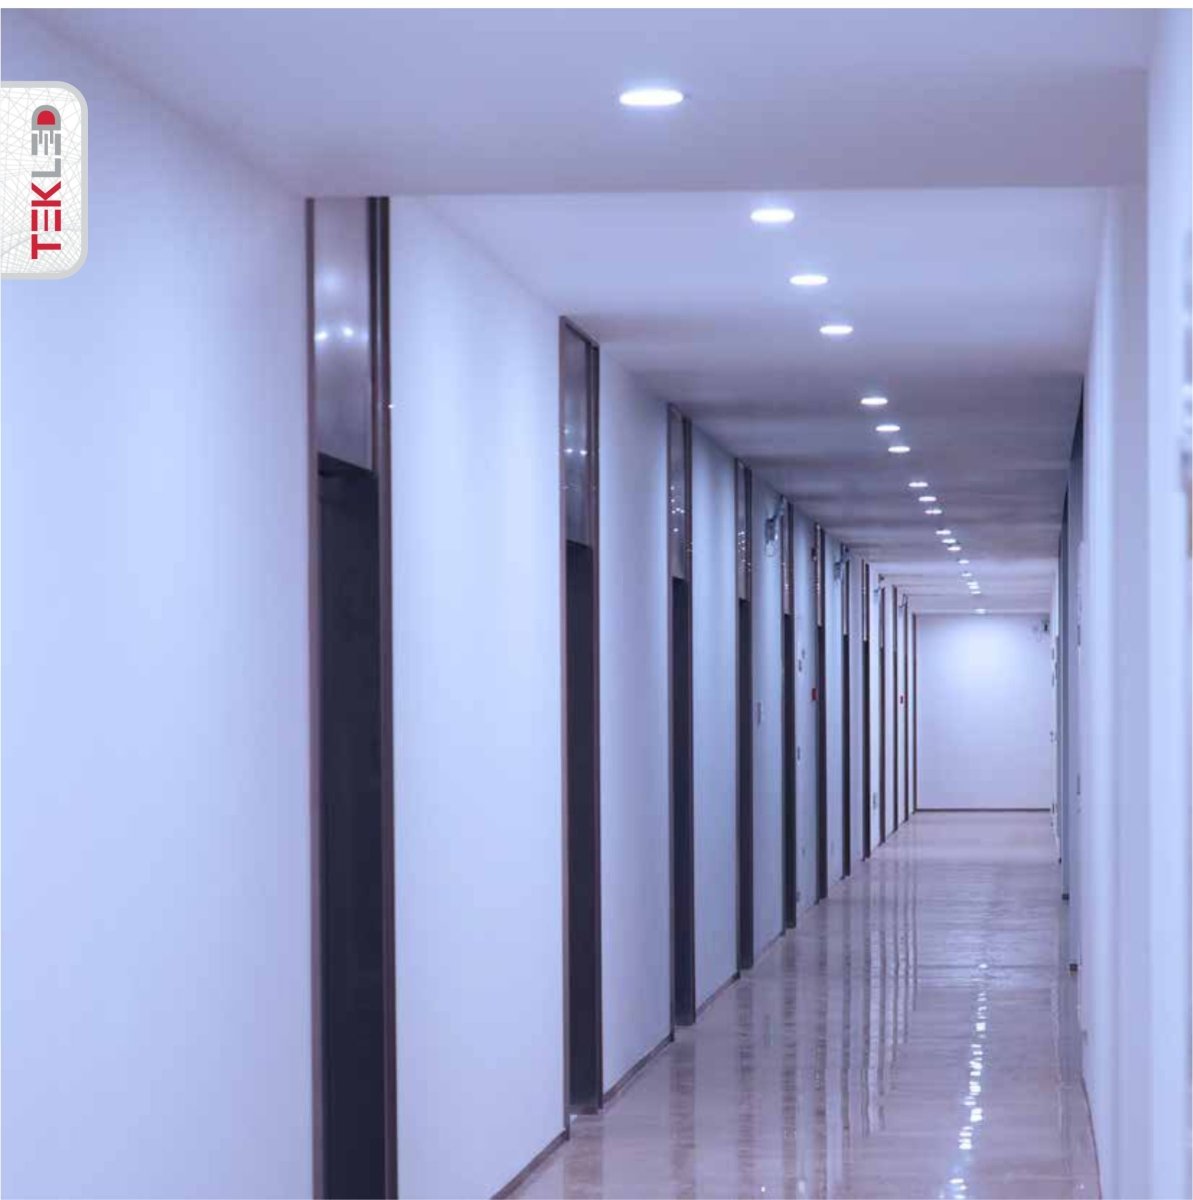 Downlight Led Round Slim Panel Light 18W 5700K Cool Daylight D220Mm in indoor setting hallway